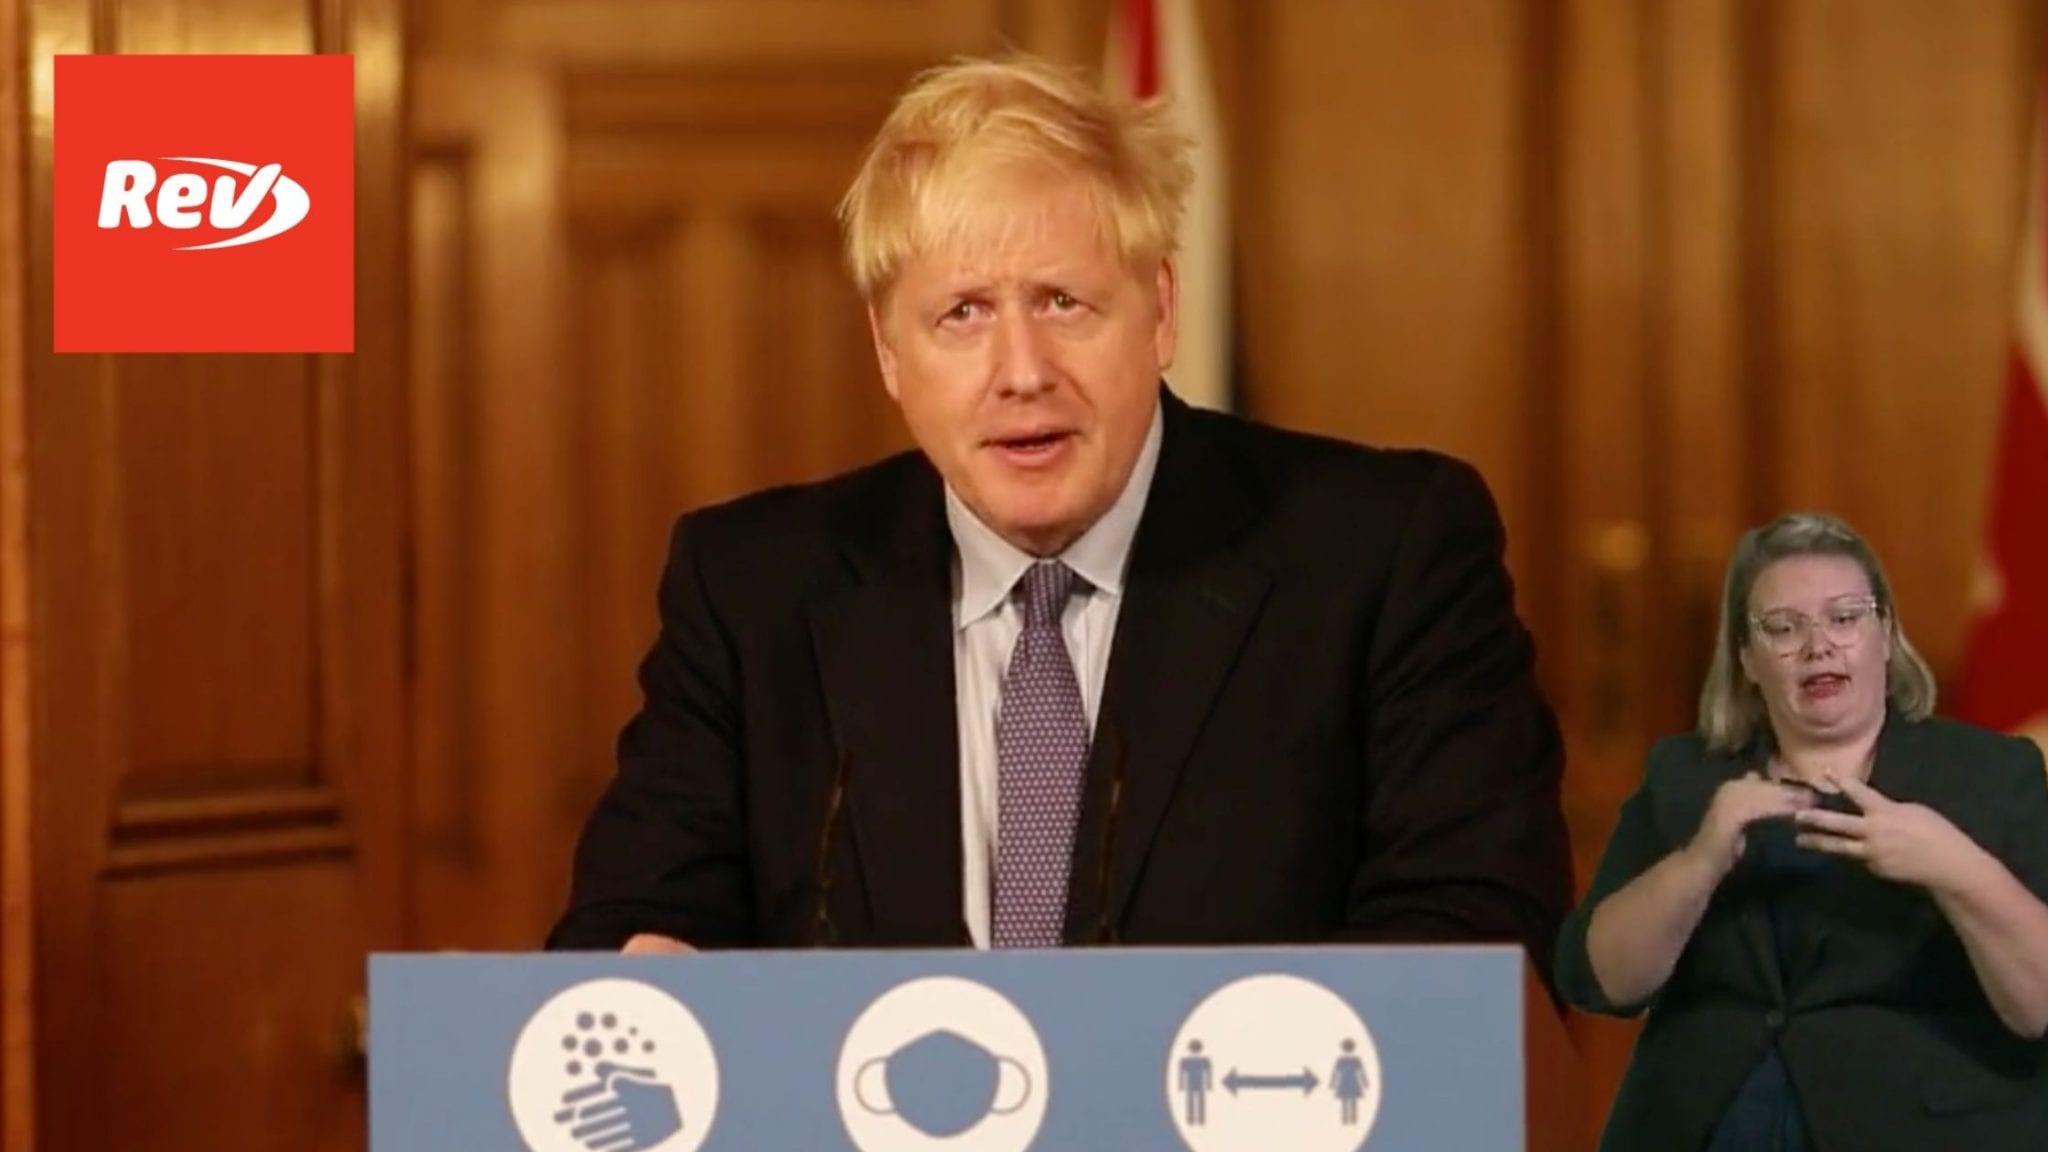 UK Prime Minister Boris Johnson Coronavirus Press Conference Transcript October 20